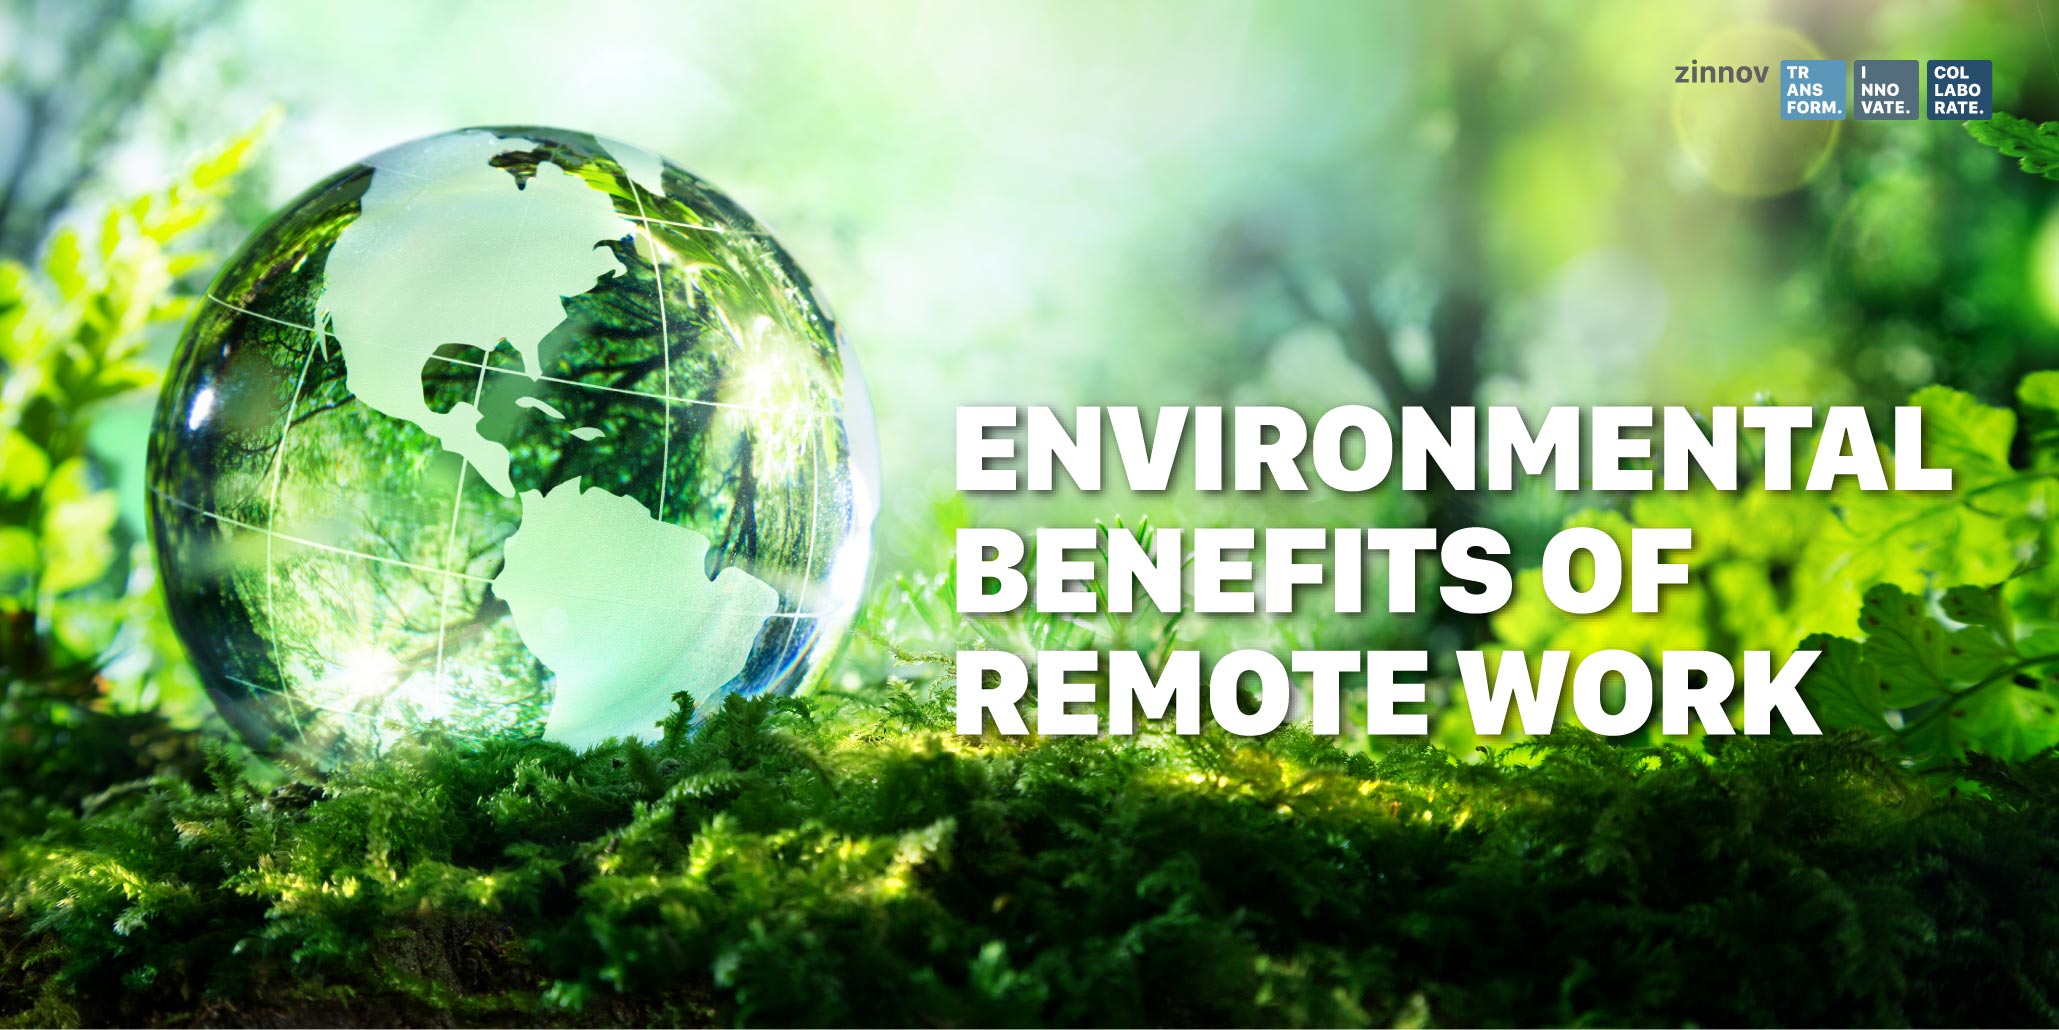 Environmental benefits of remote work